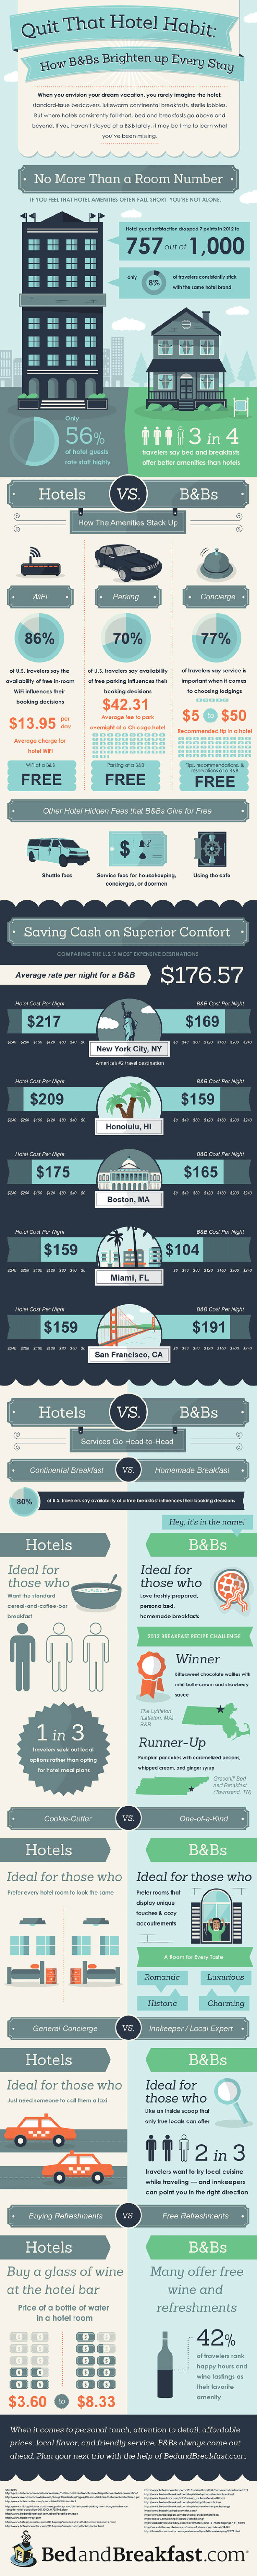 Infographic Hotels vs b&b's